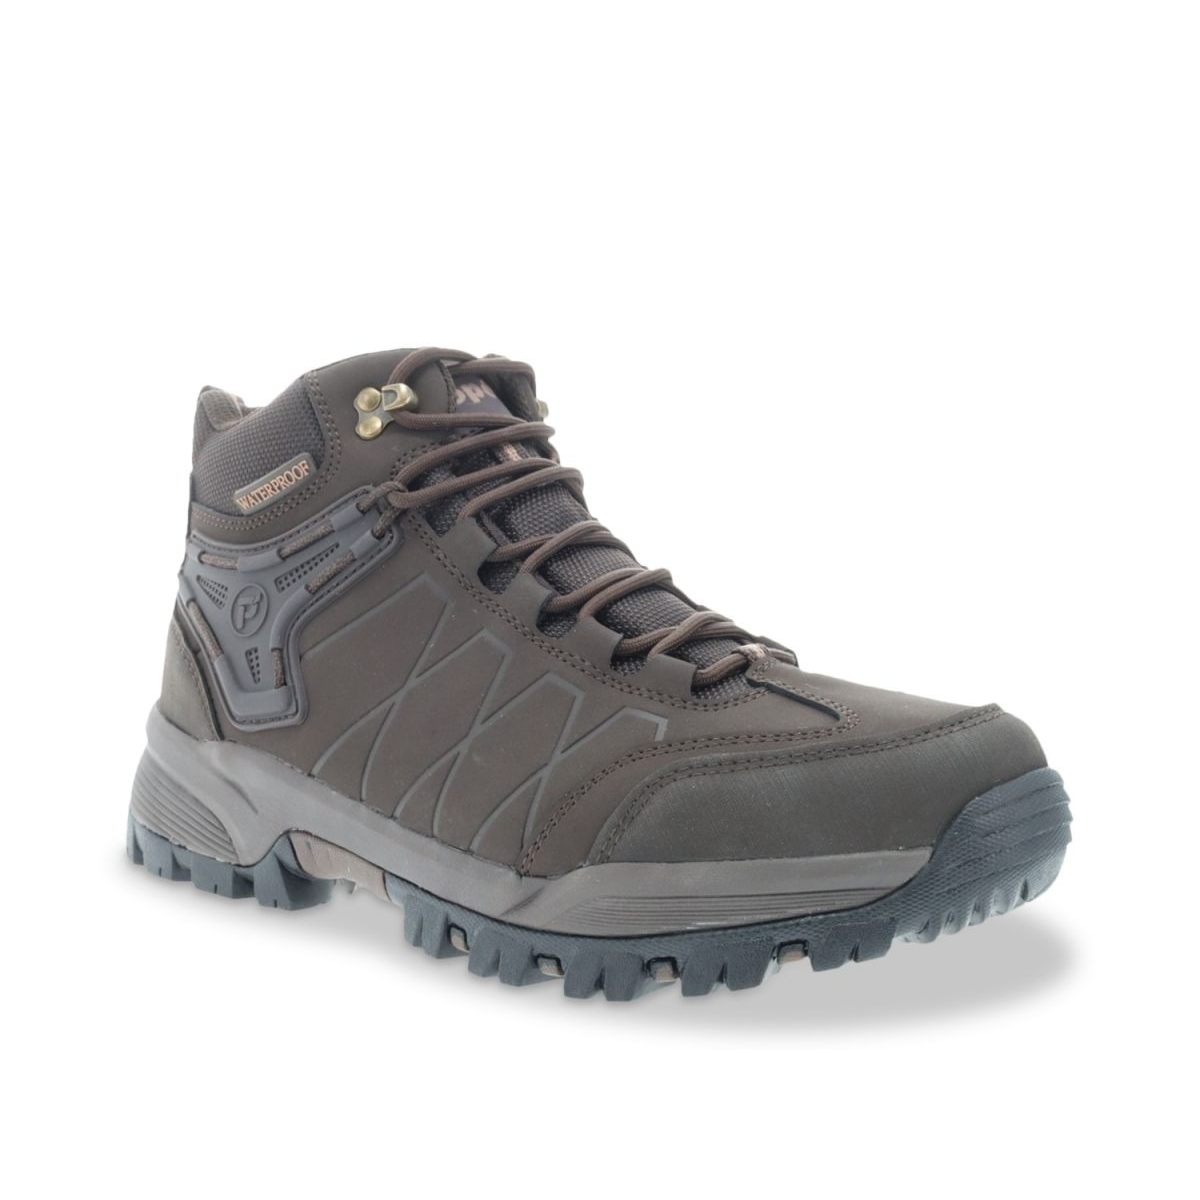 Propet Men's Ridge Walker Force Hiking Boots Dark Brown - MBA052LBR BROWN - BROWN, 14 X-Wide